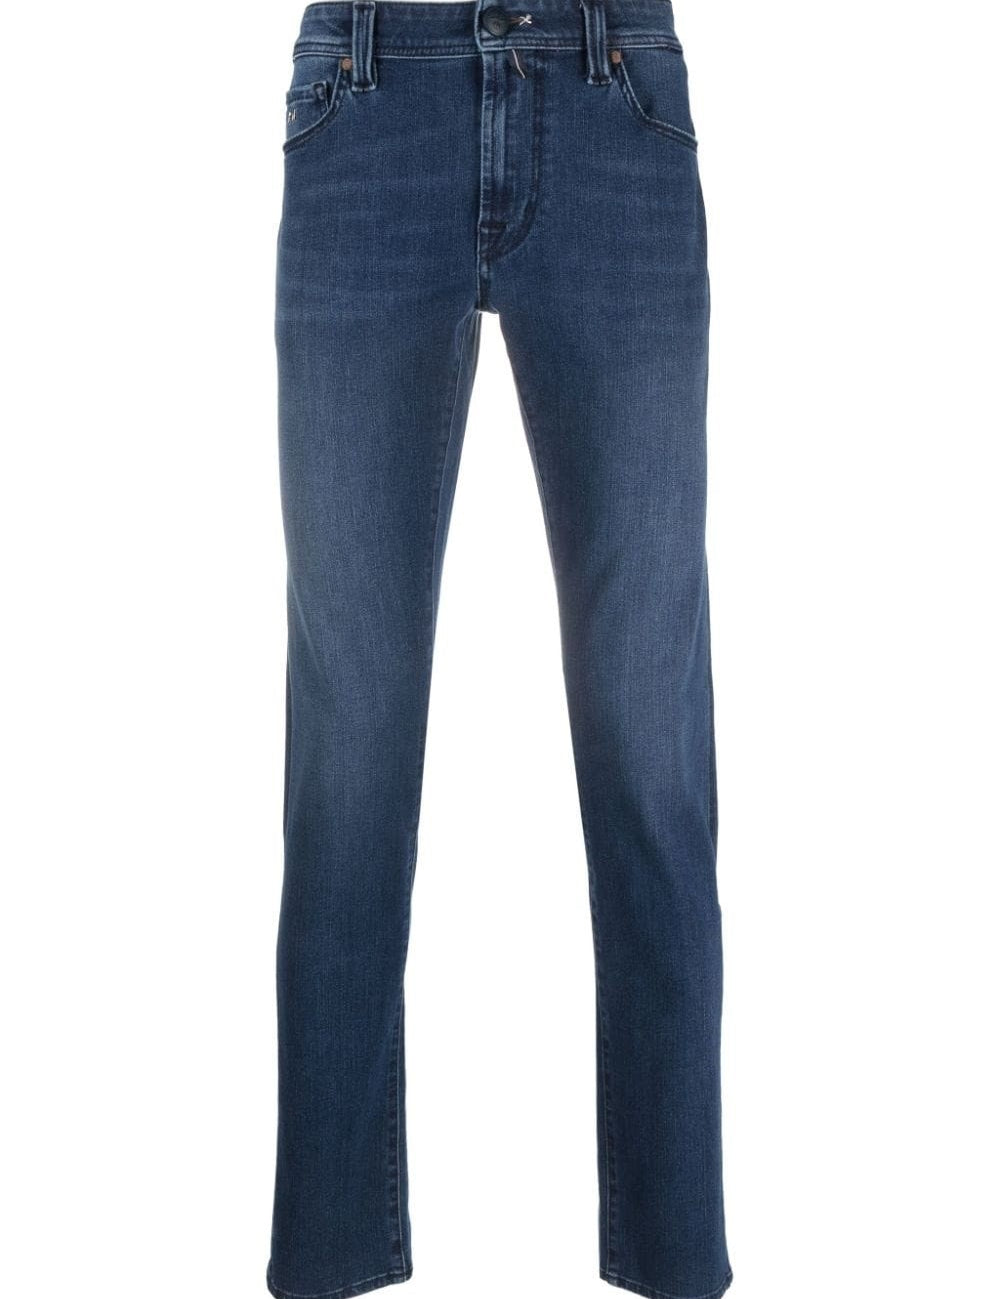 leonardo-stretch-jeans.jpg